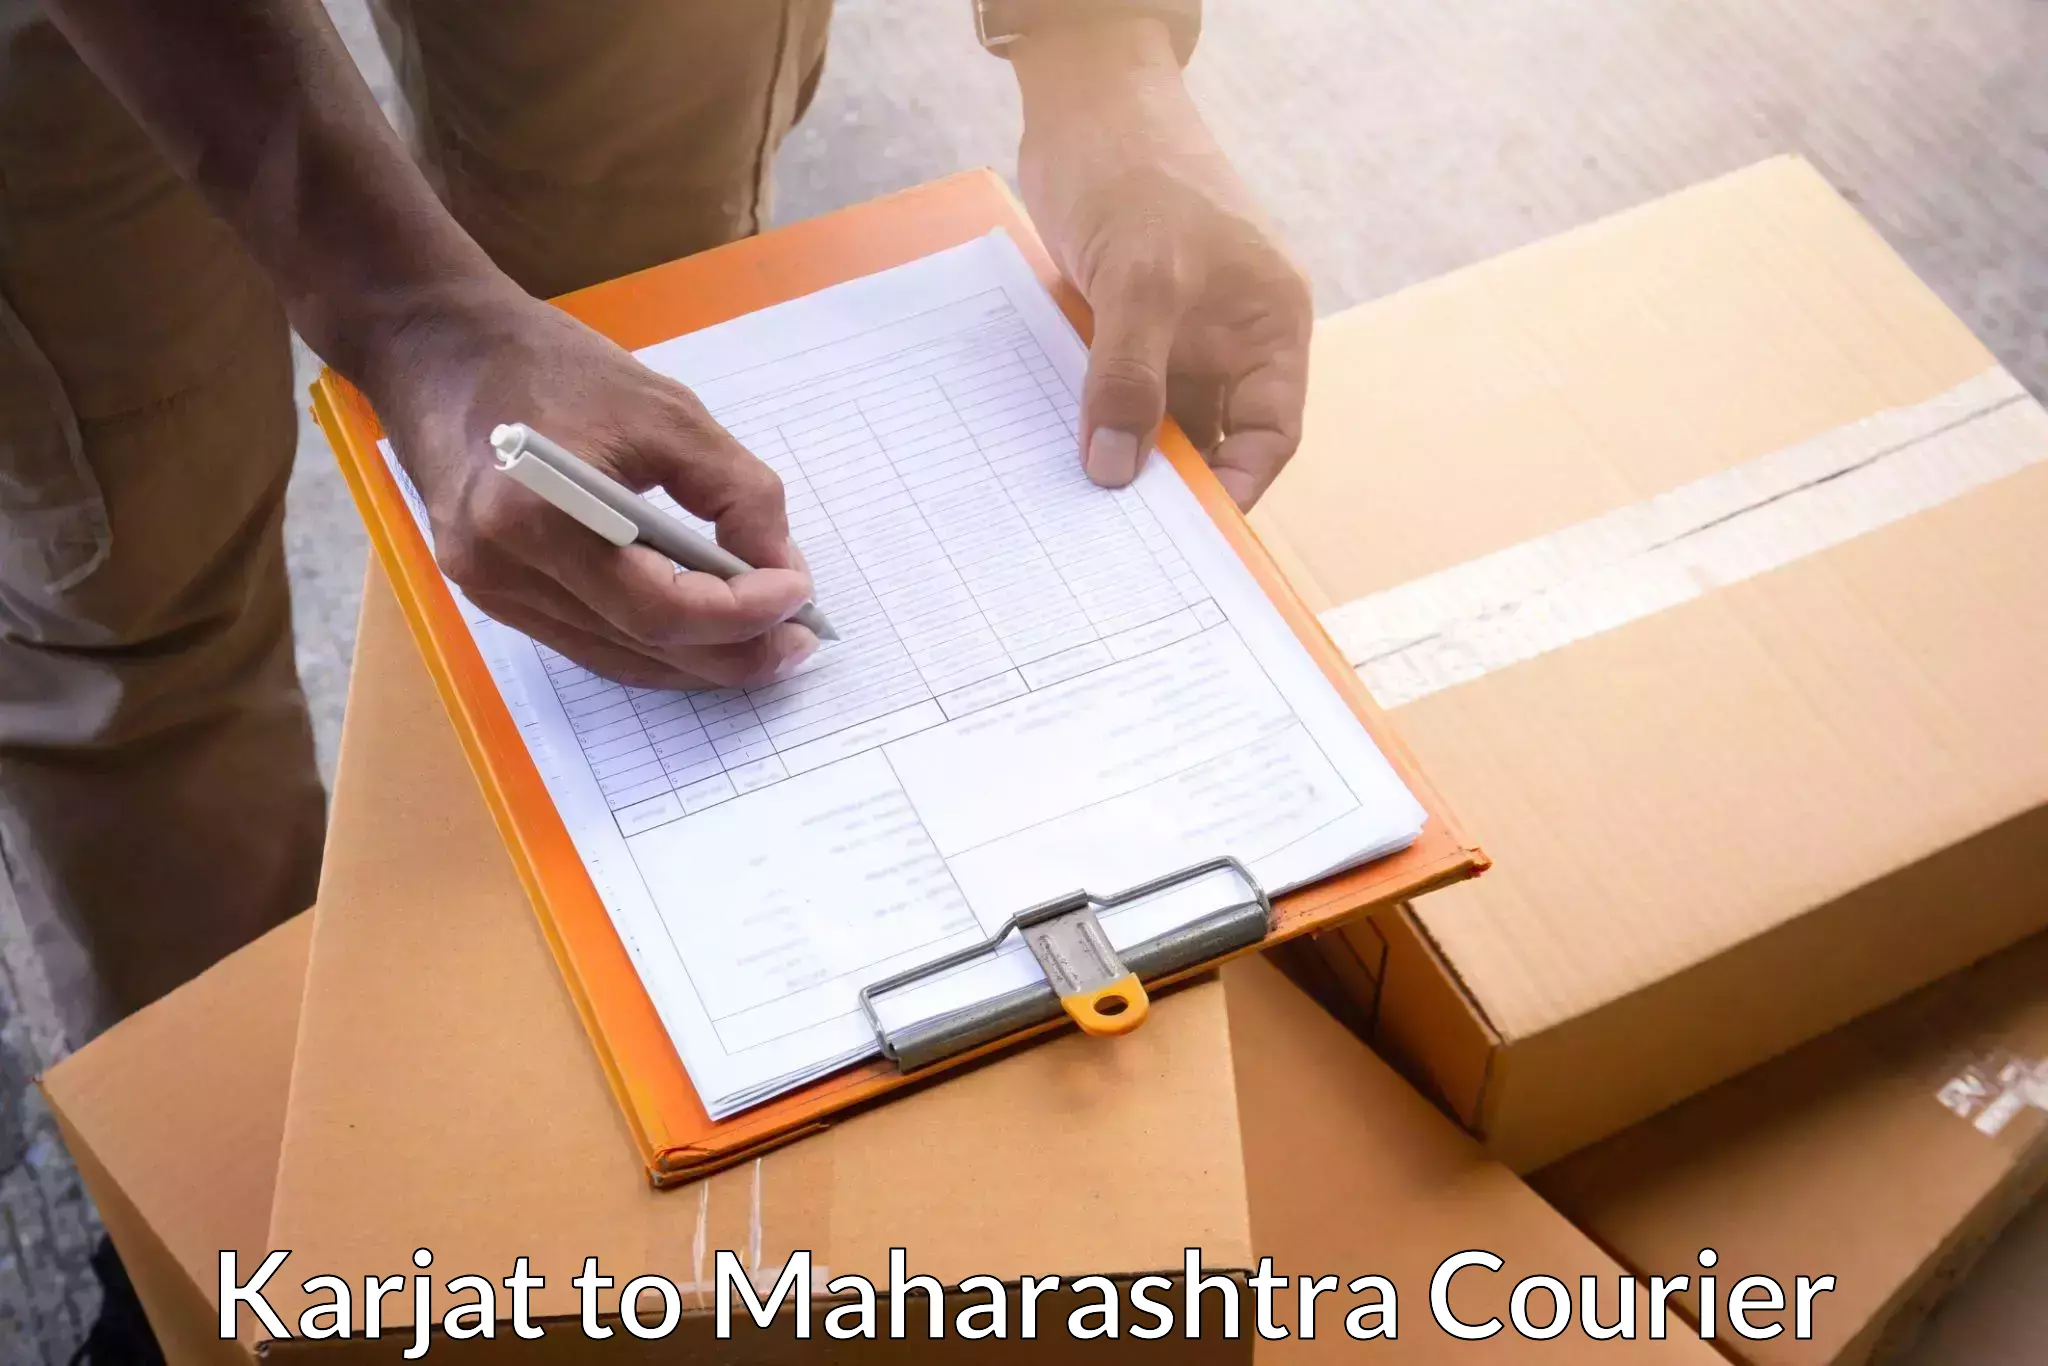 Nationwide courier service Karjat to Maharashtra